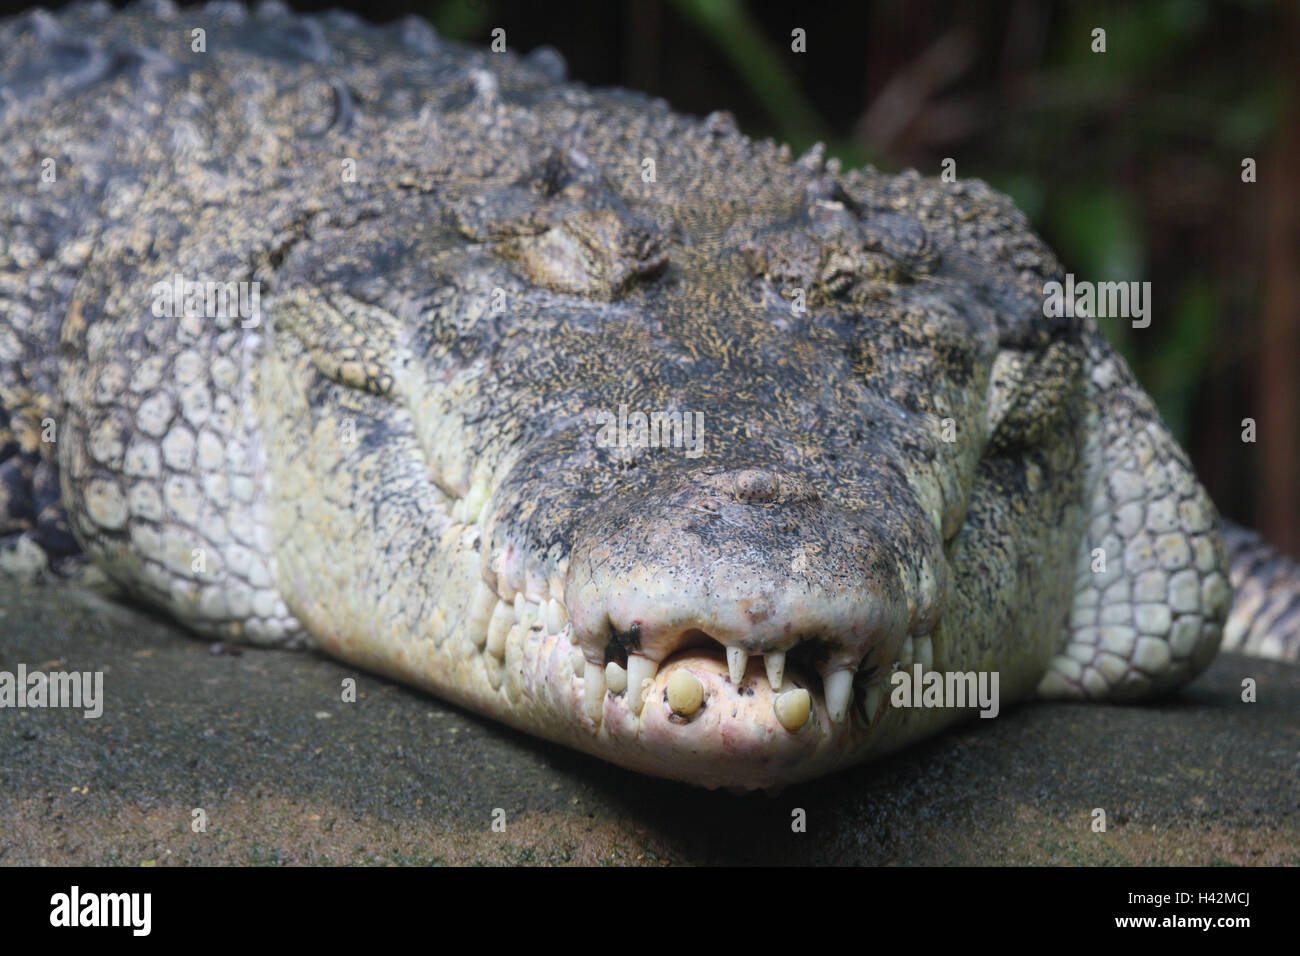 Saltwater crocodile, Stock Photo